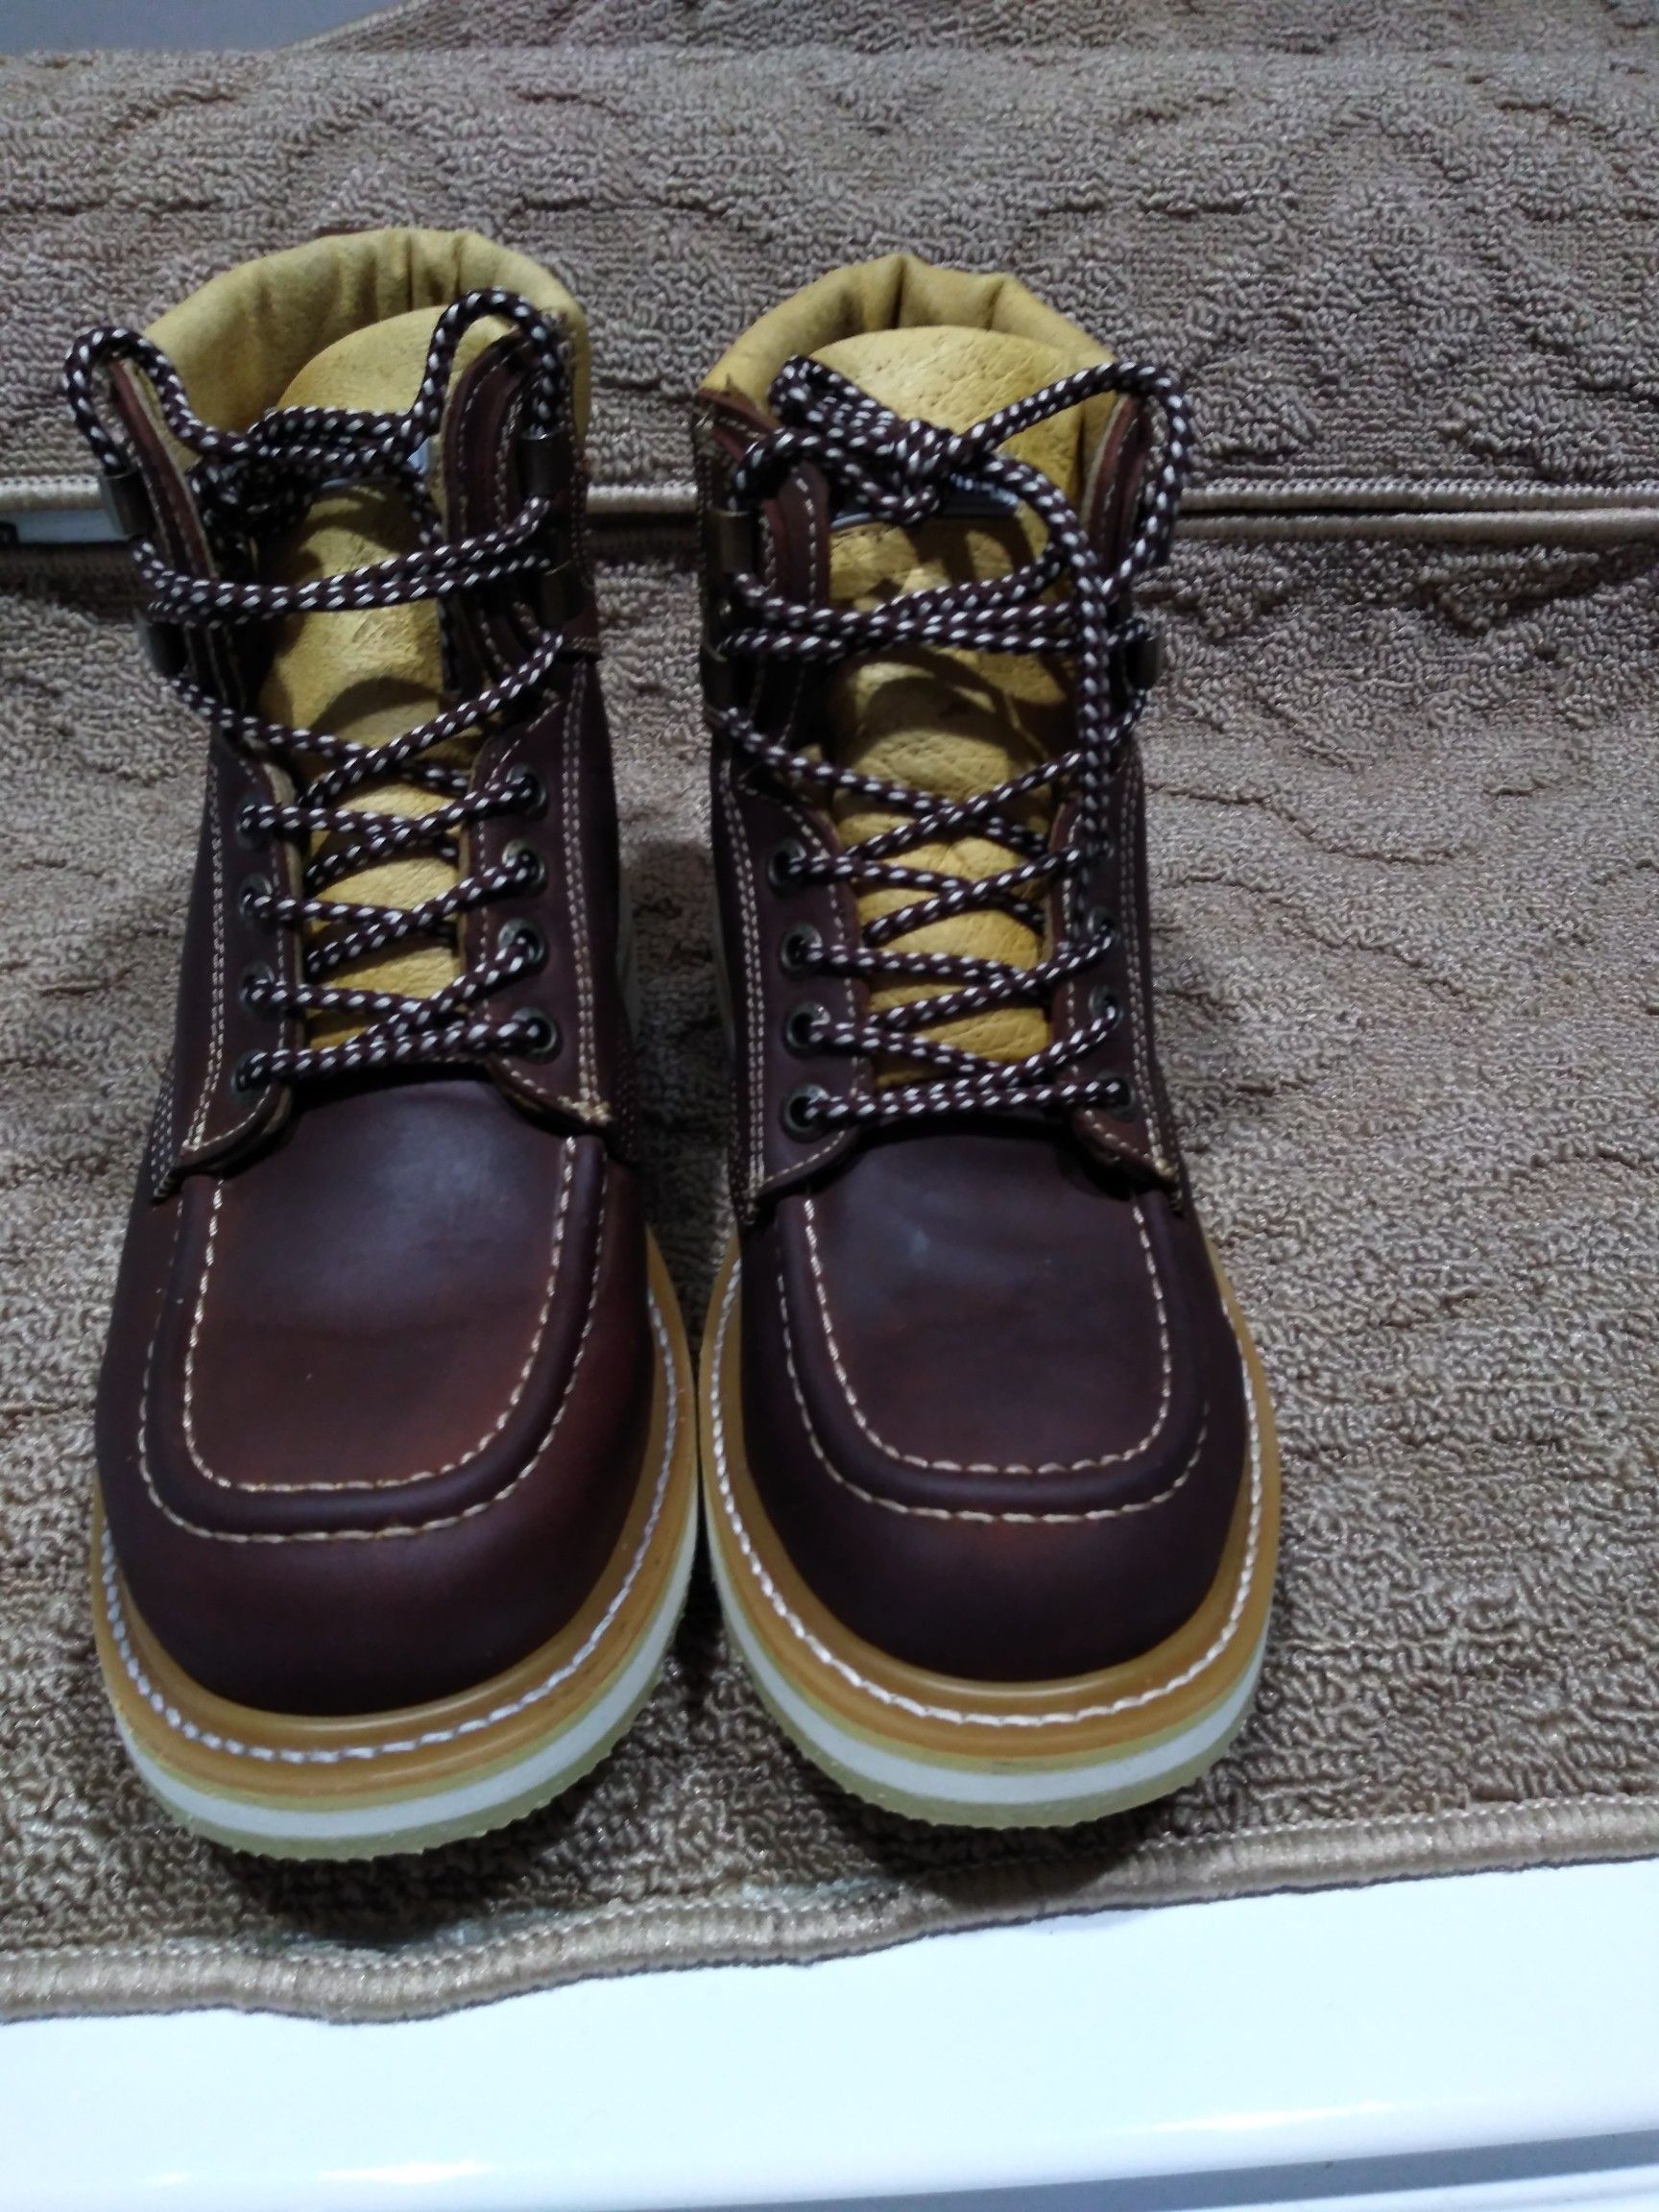 100% Leather Work Boots-Bota 100% de Piel